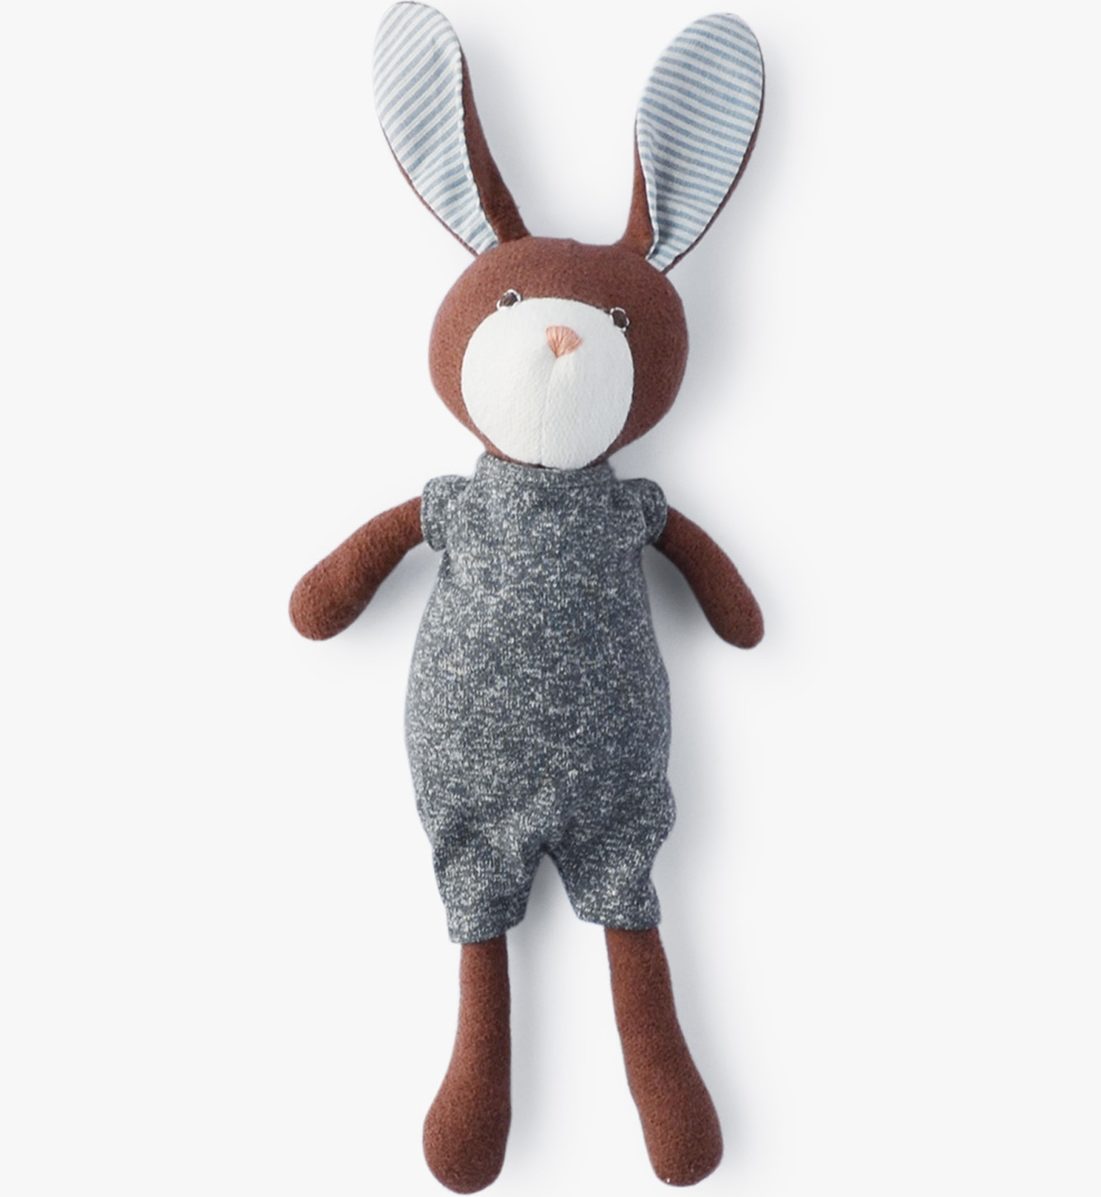 Lucas Rabbit Stuffed Bunny - The Project Nursery Shop